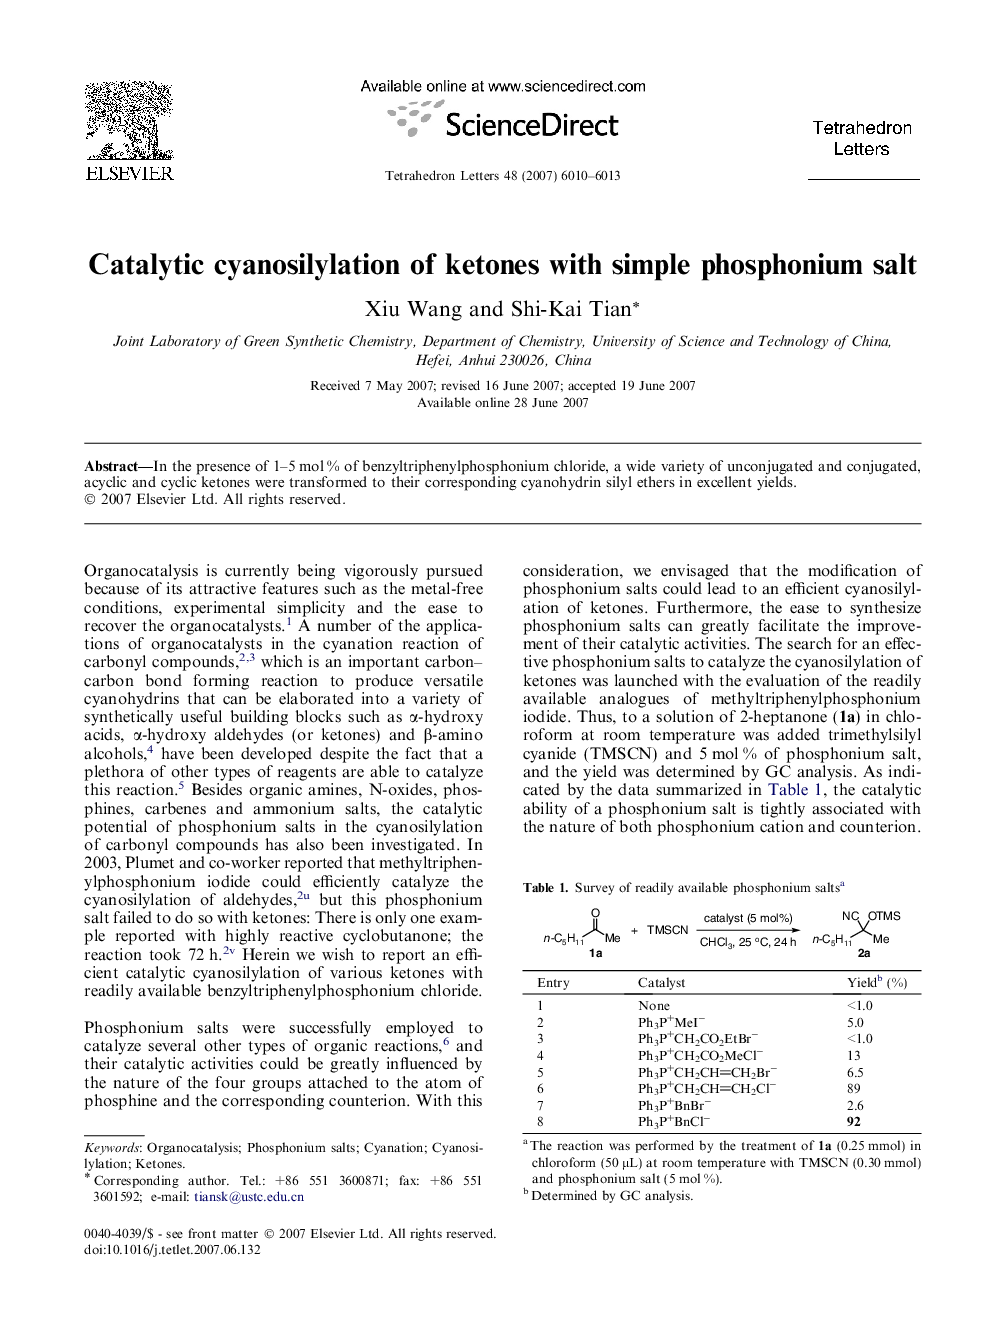 Catalytic cyanosilylation of ketones with simple phosphonium salt